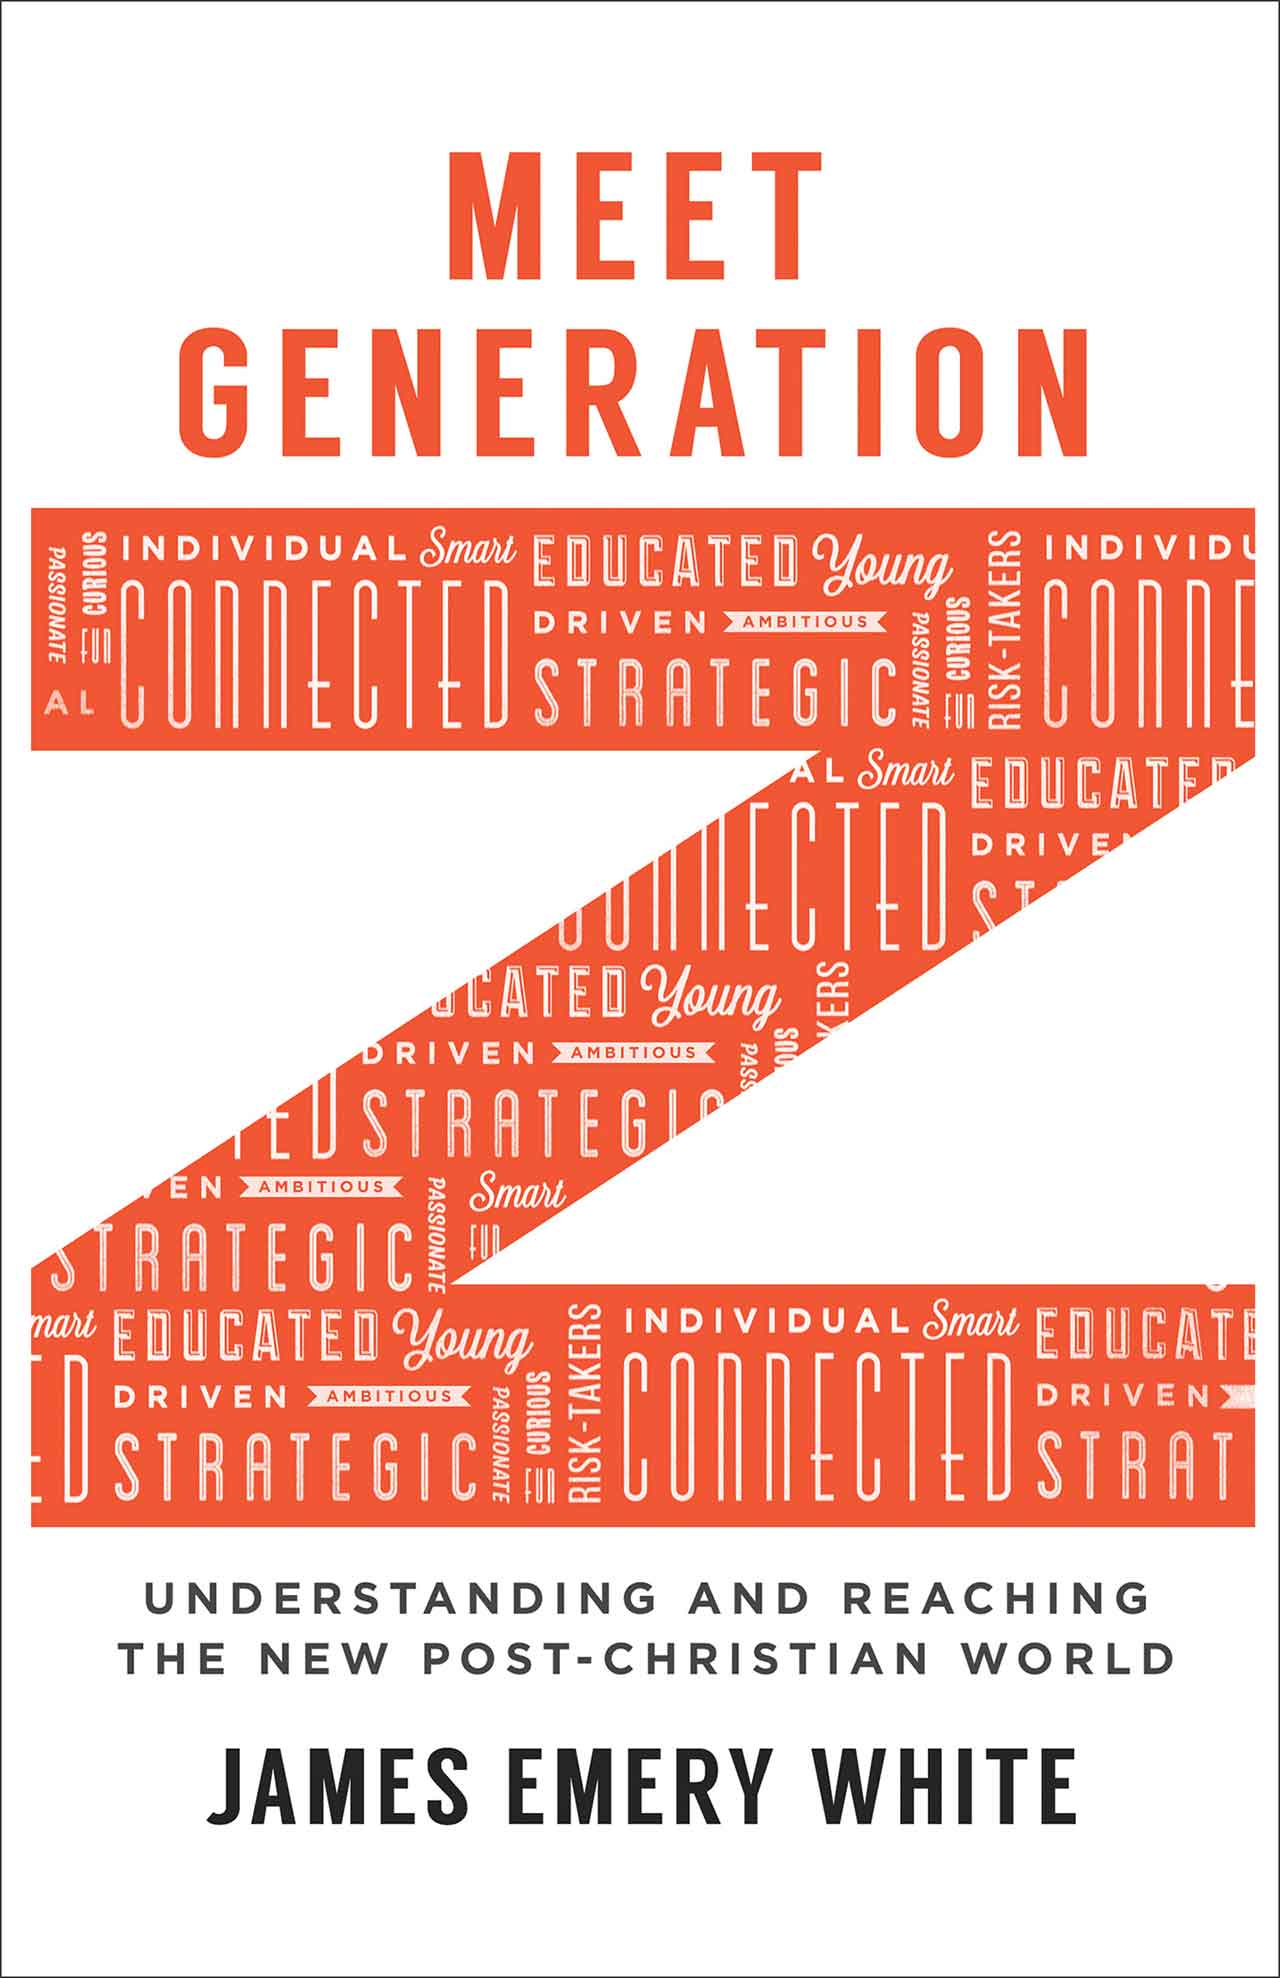 generationz